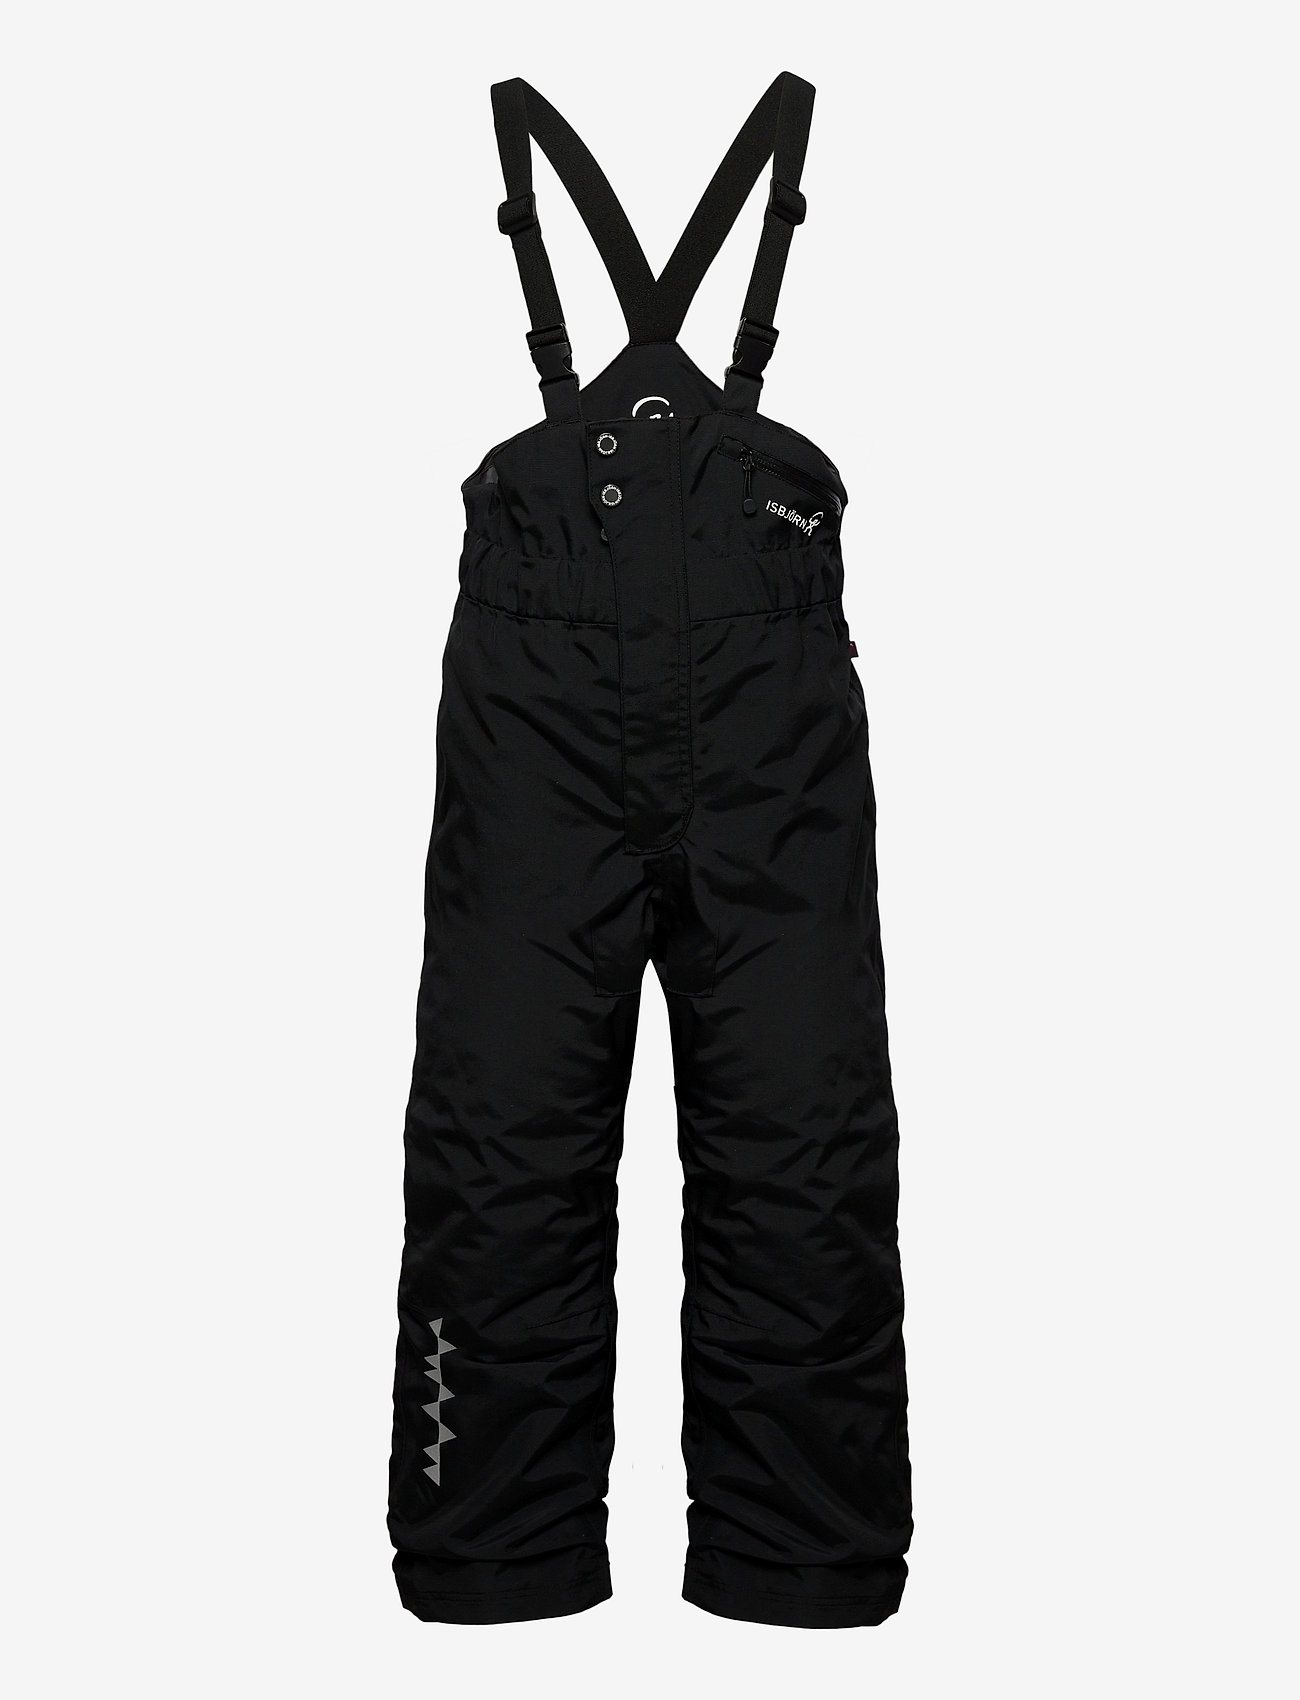 ISBJÖRN of Sweden - POWDER Winter Pant Kids - ski pants - black - 0